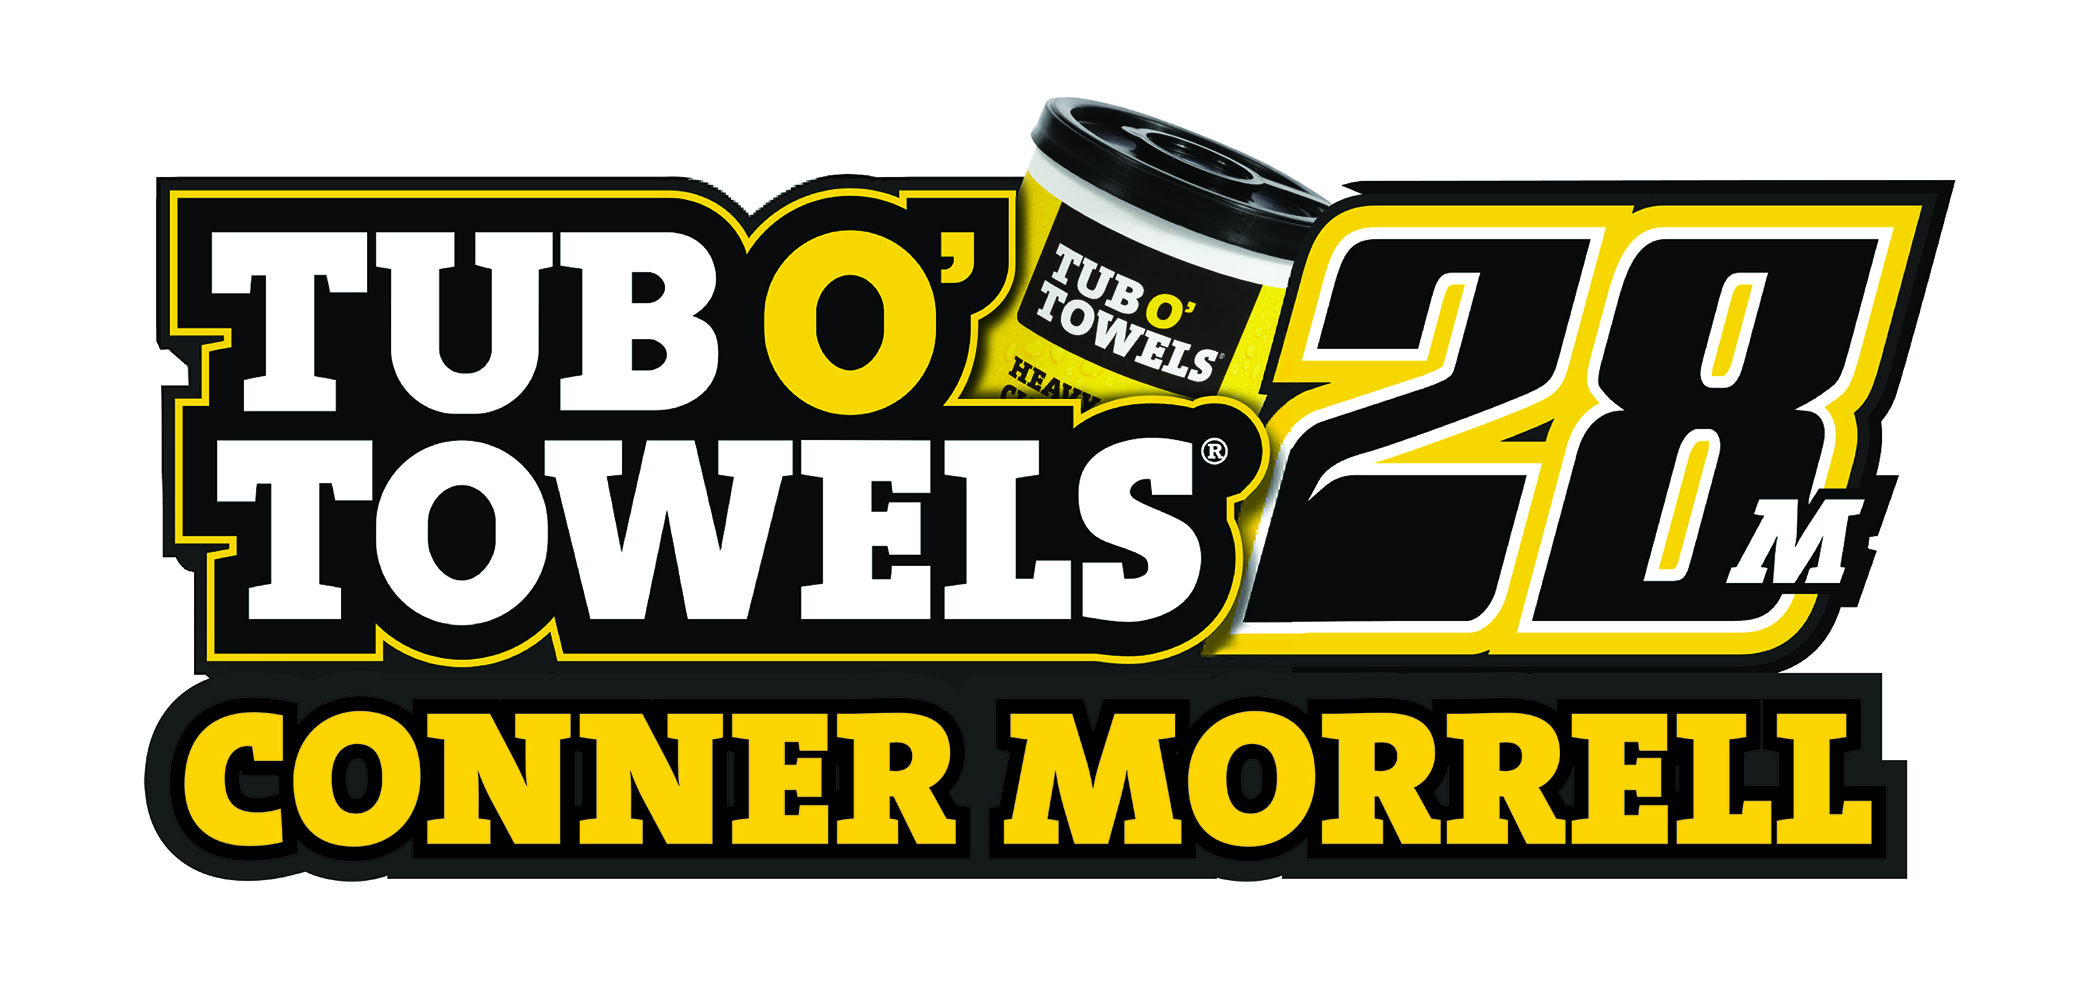 Tub O' Towels Sponsors Sprint Car Racer Conner Morrell | THE SHOP